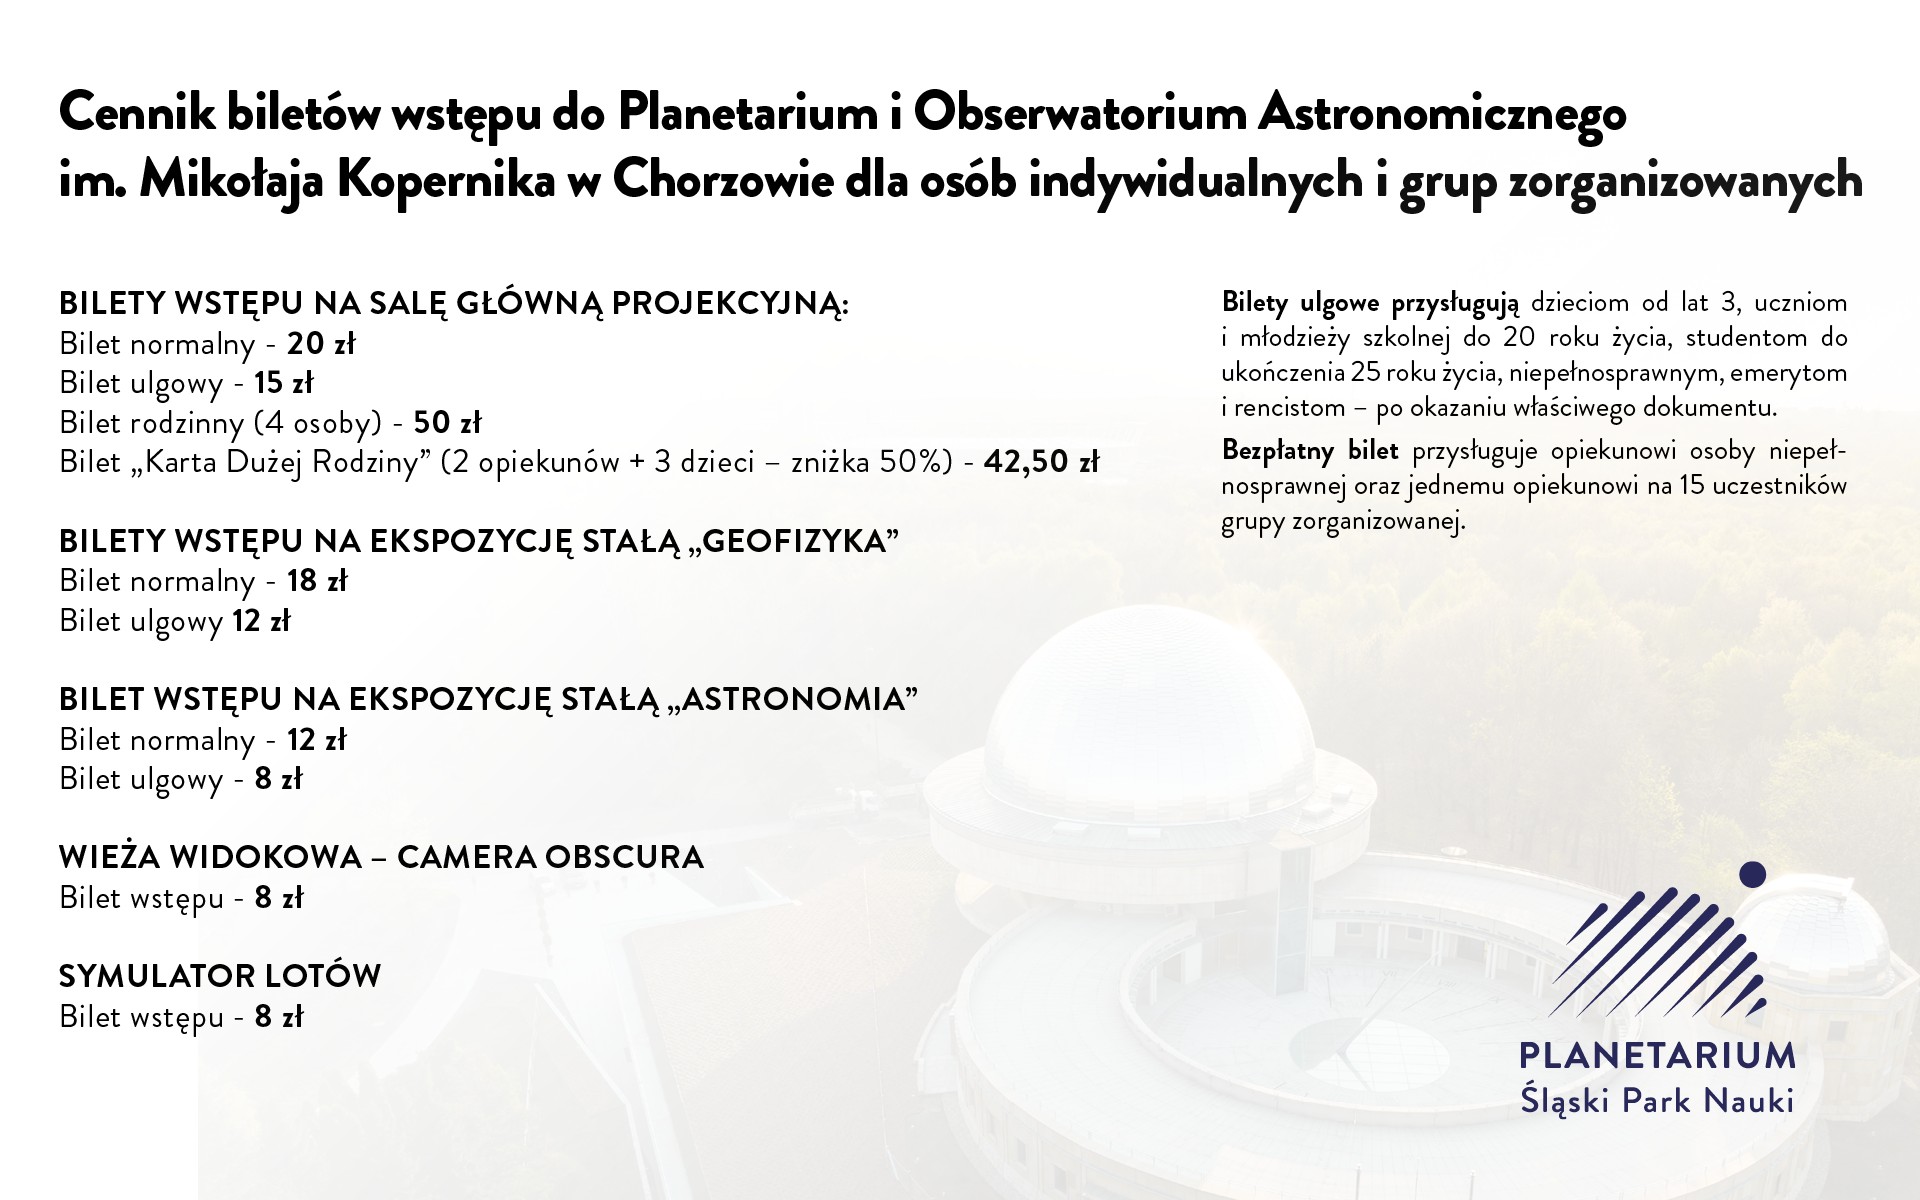 Cennik biletów do Planetarium - Śląski Park Nauki